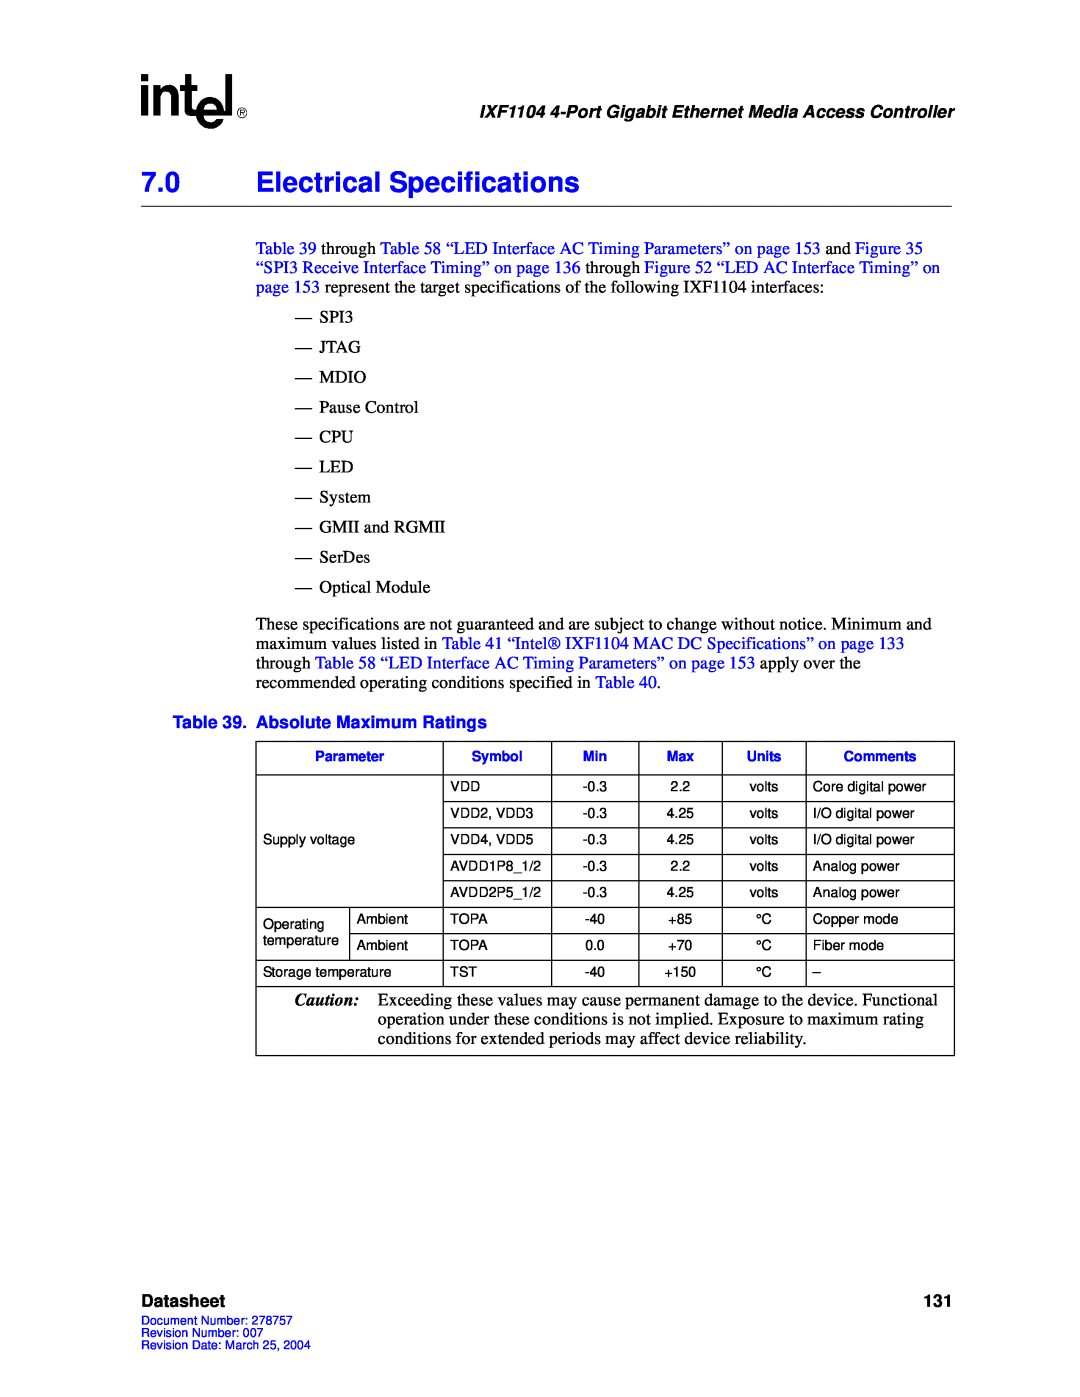 Intel IXF1104 manual 7.0Electrical Specifications, Datasheet 